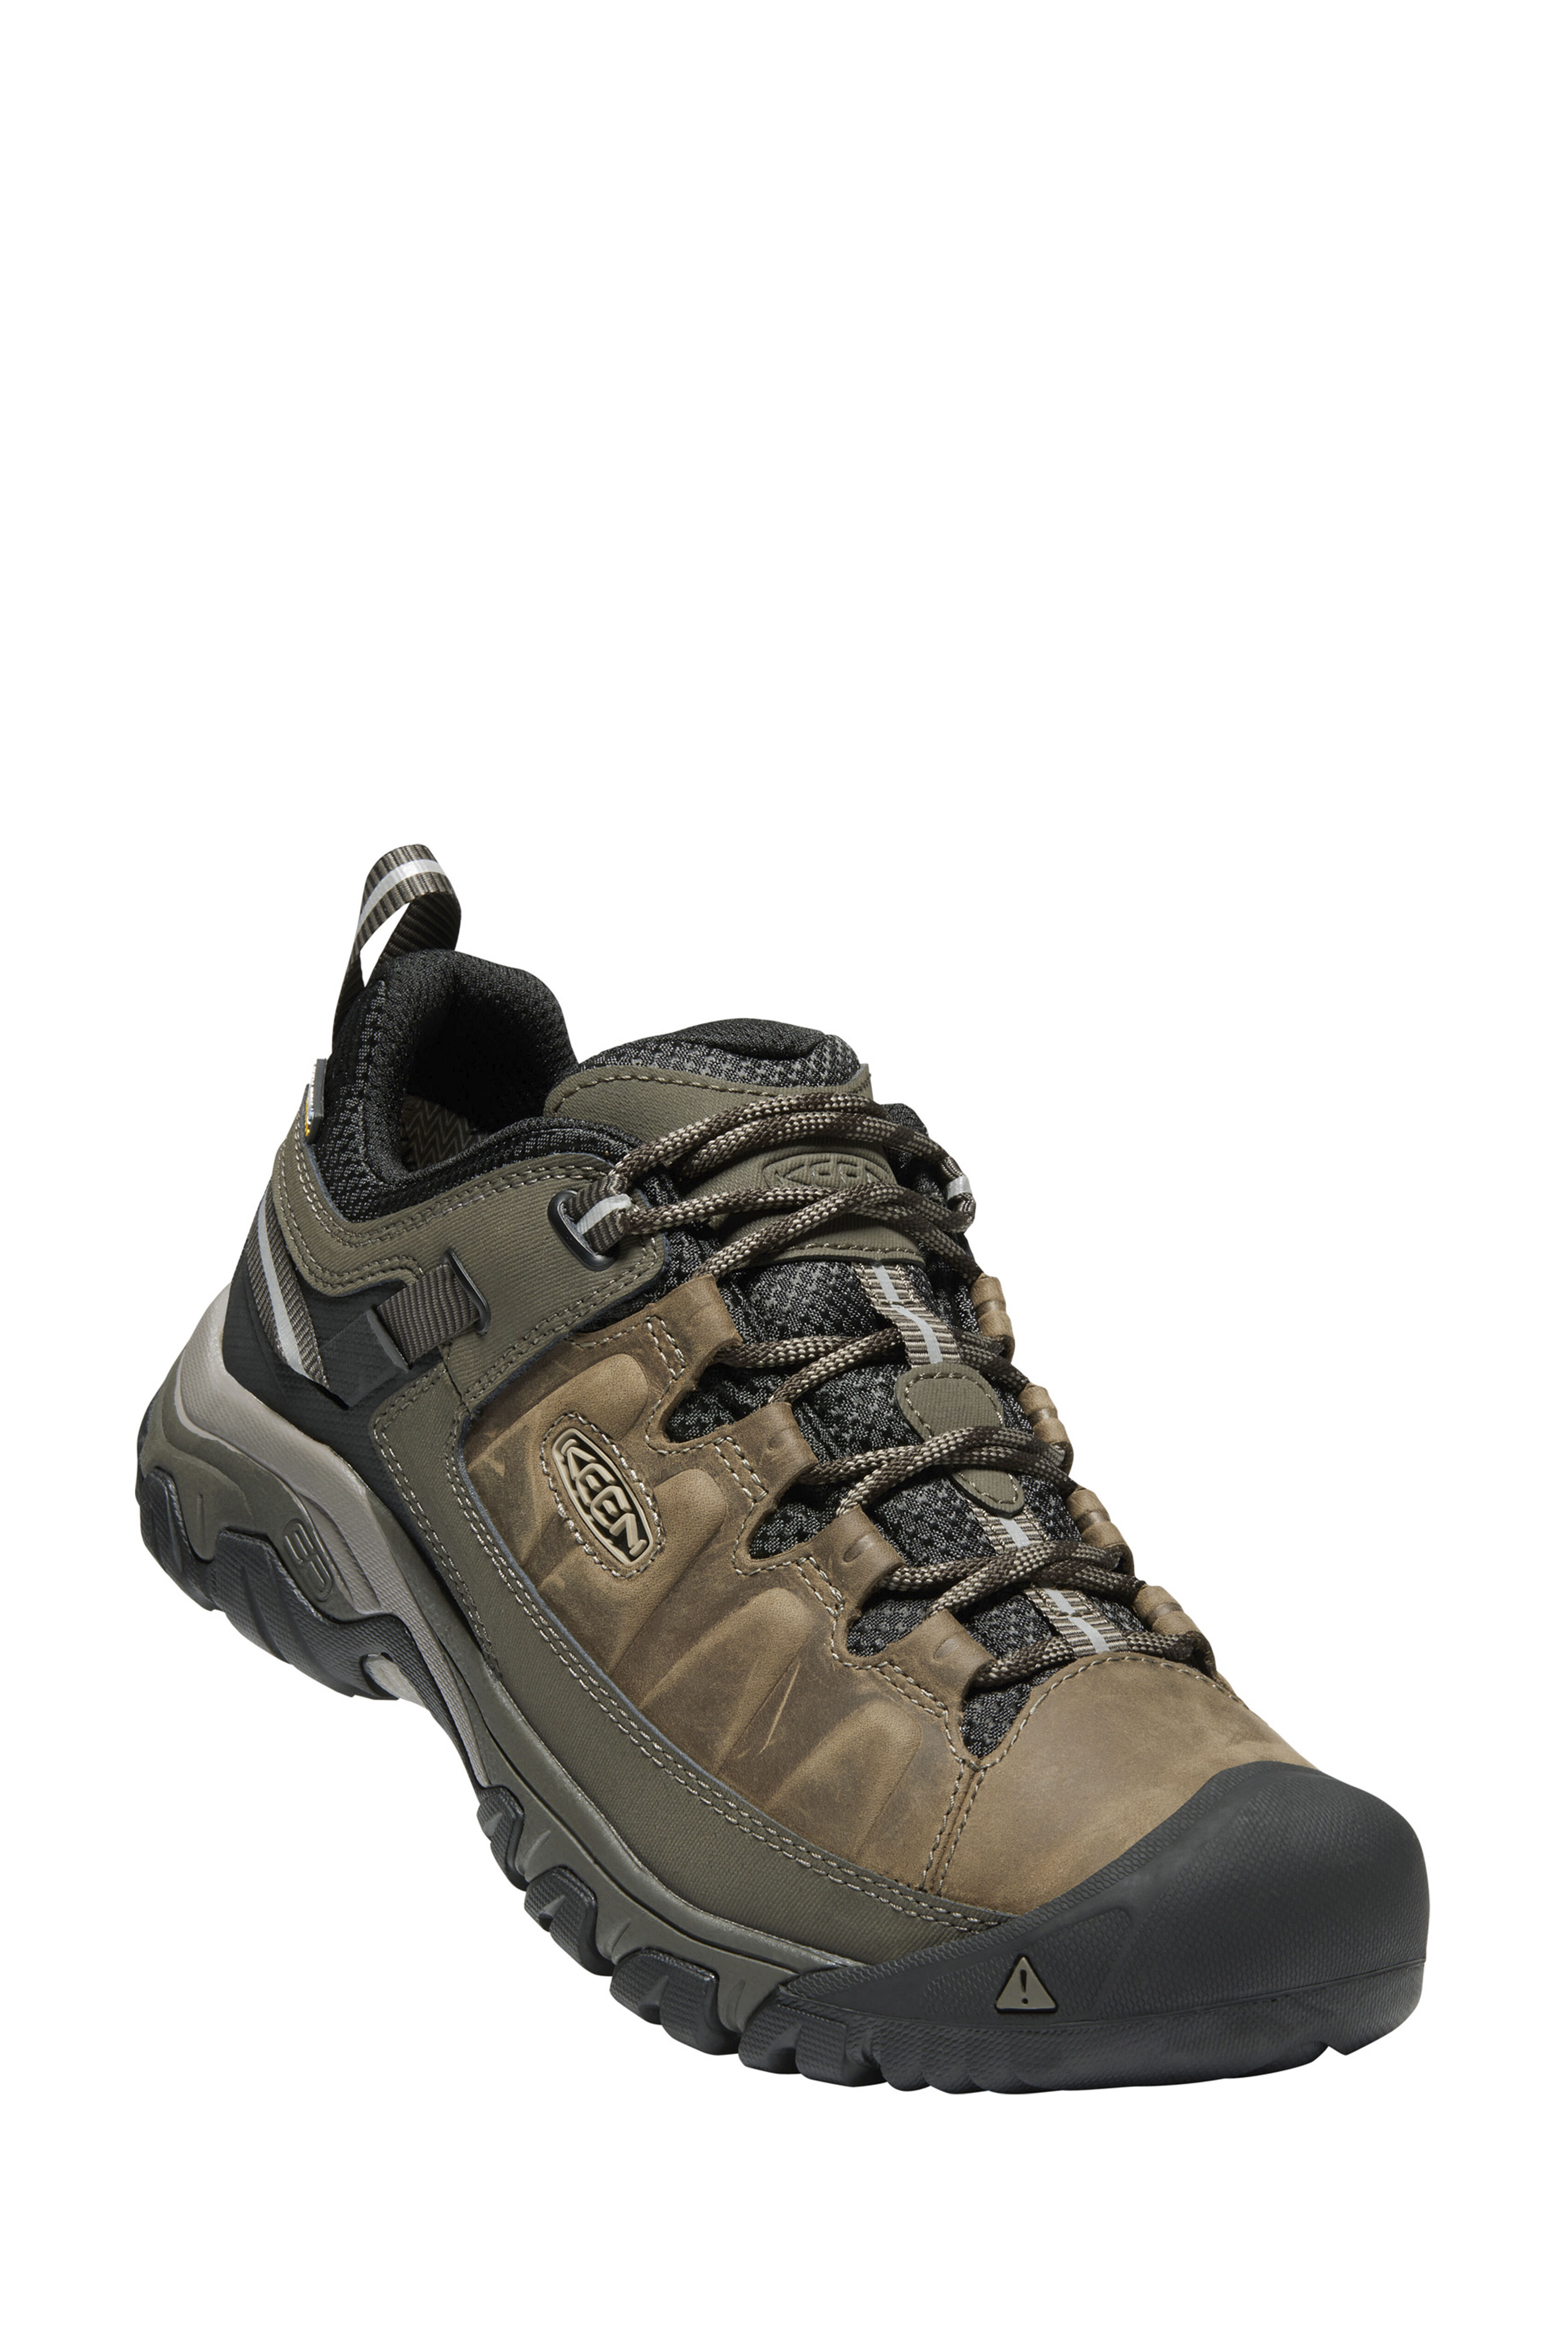 keen men's targhee iii waterproof low rise hiking shoes